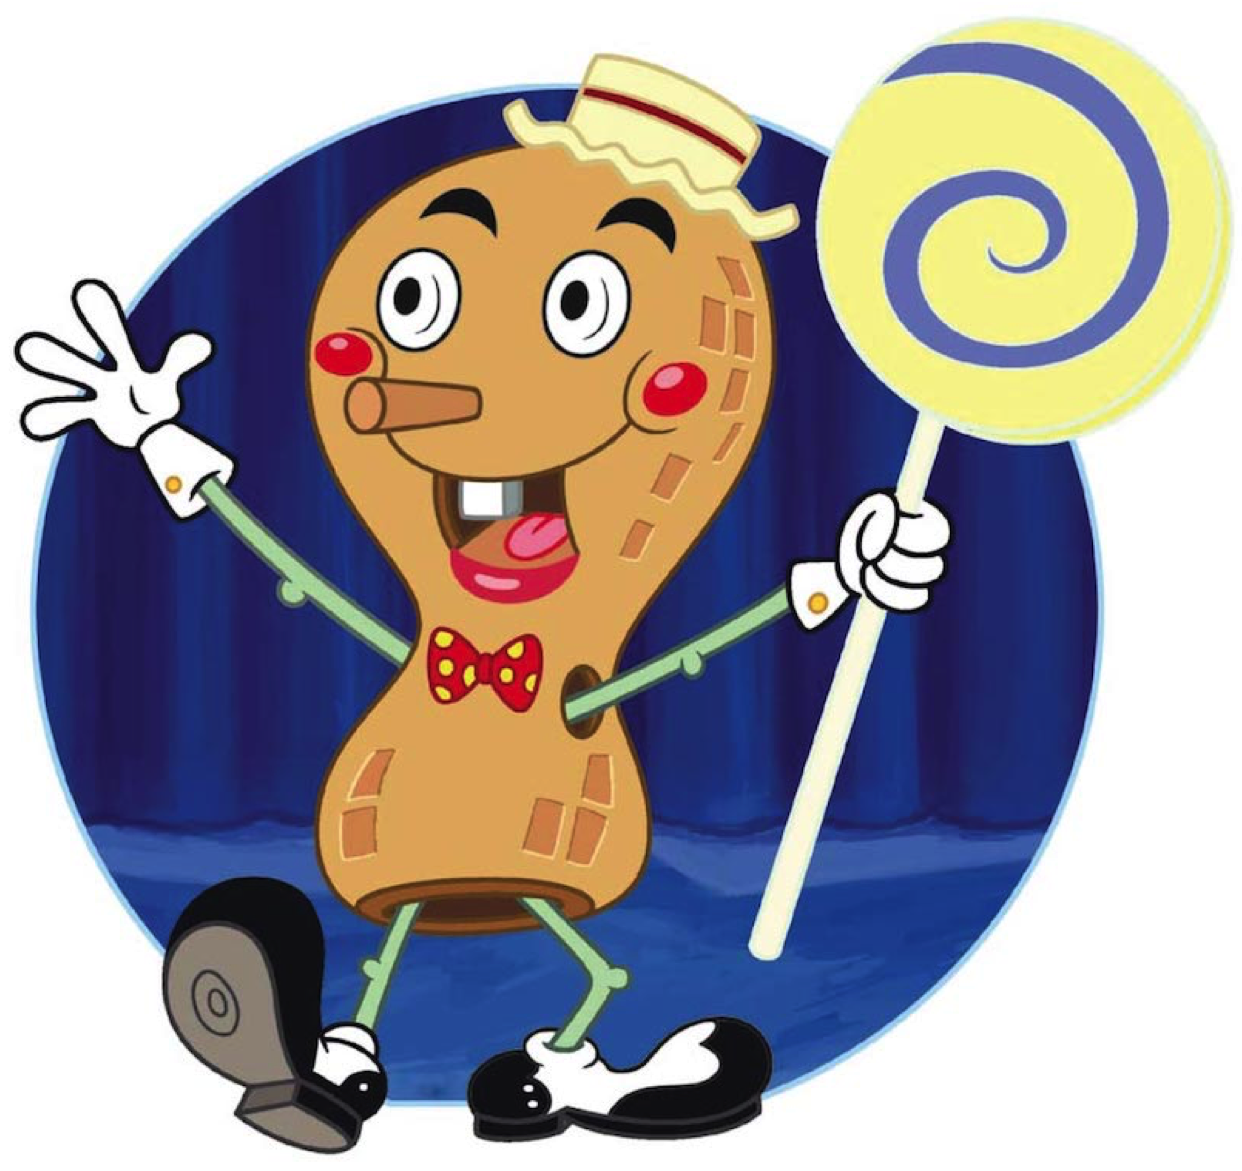 spongebob goofy goober peanut